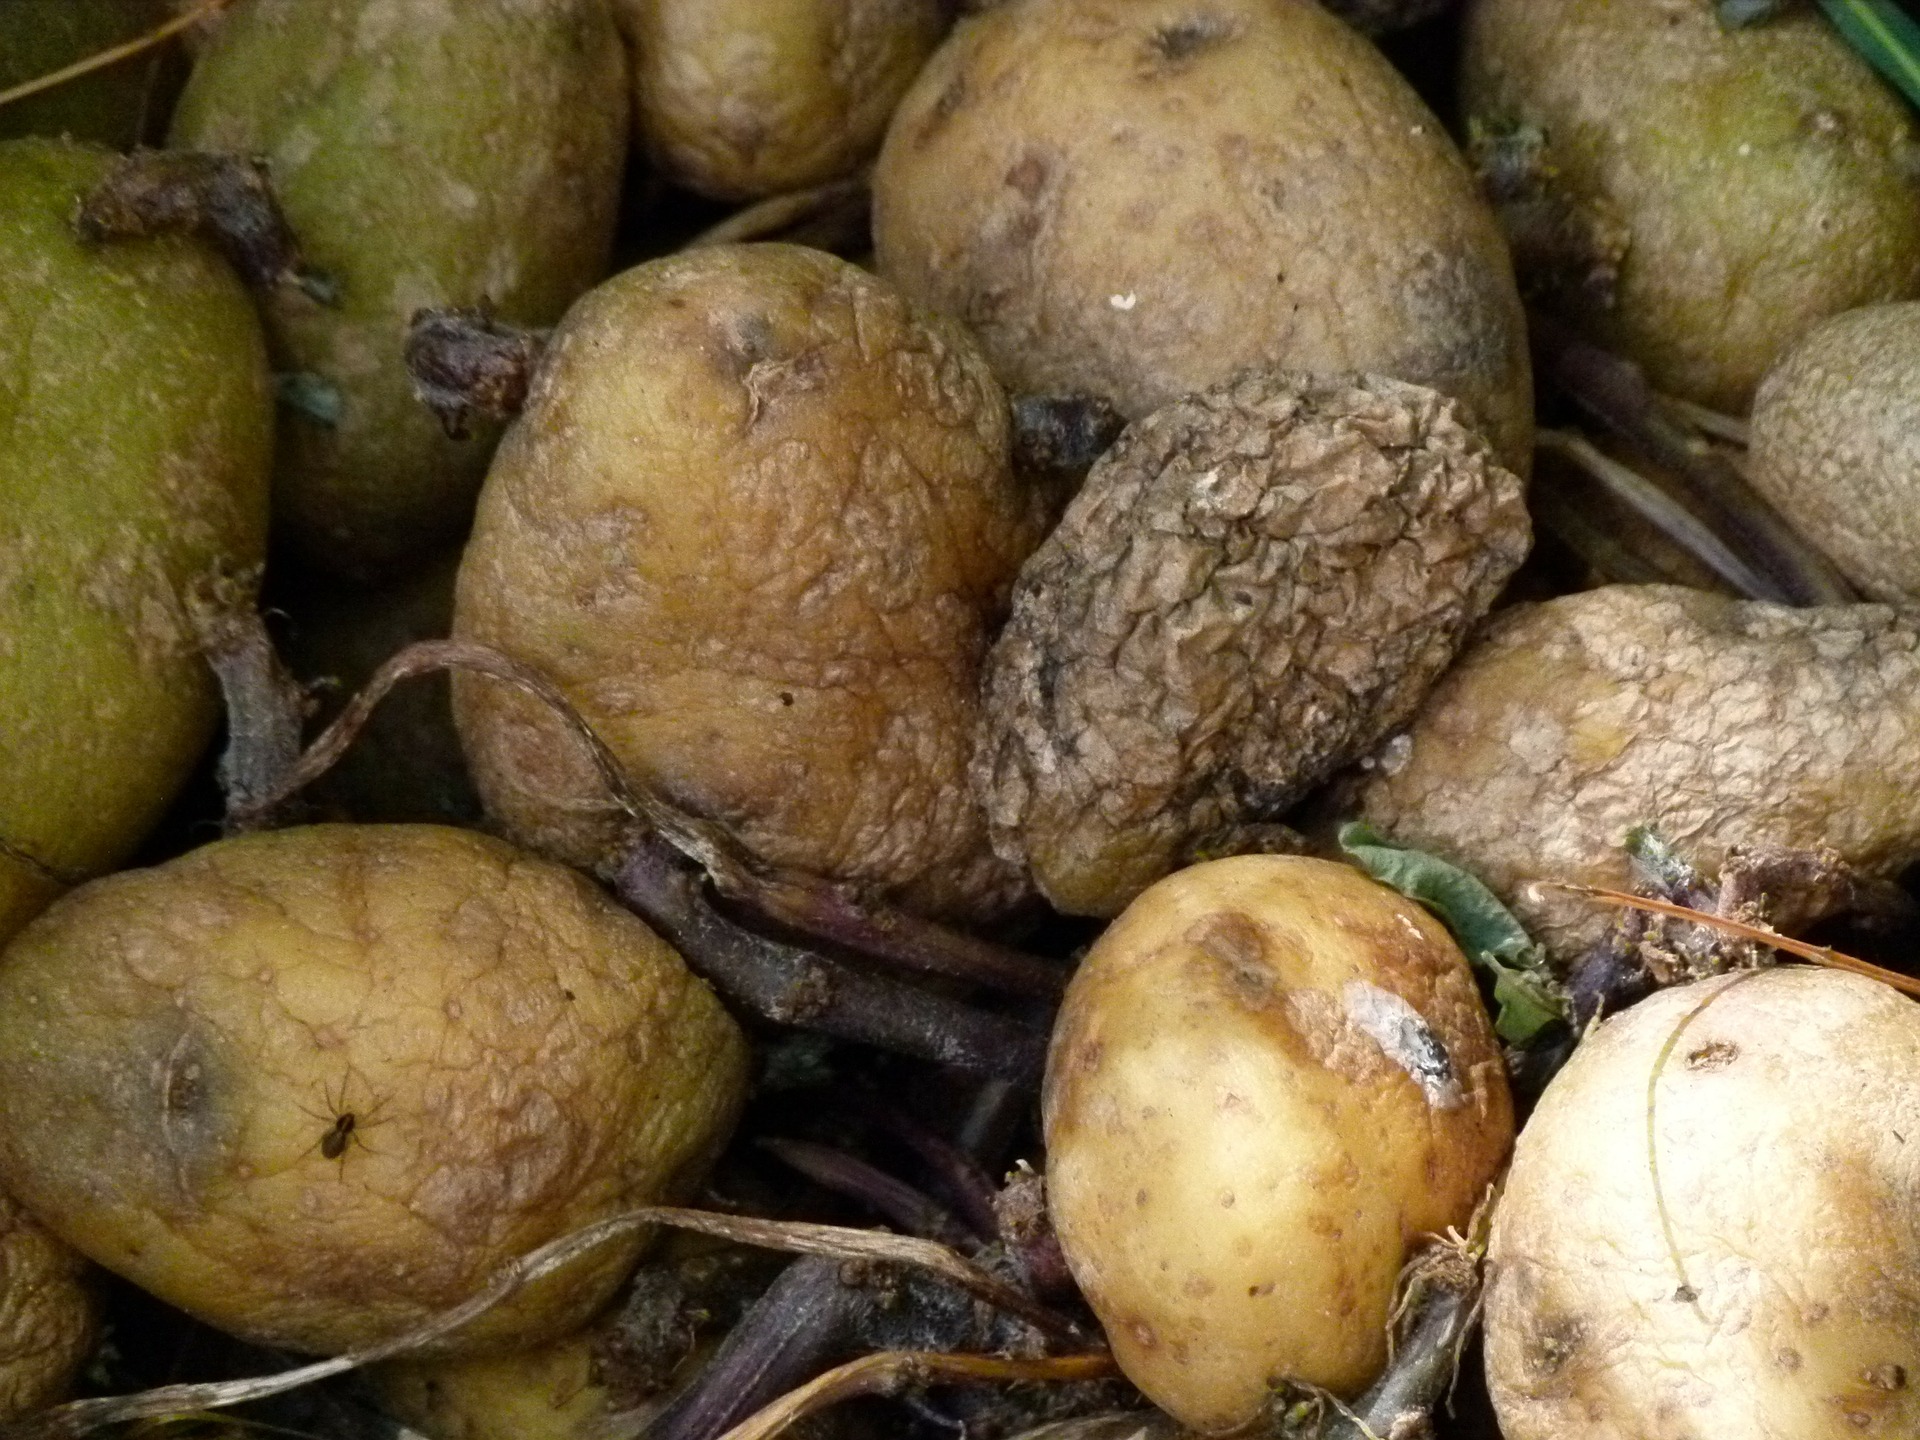 rotting-potatoes-185928_1920.jpg